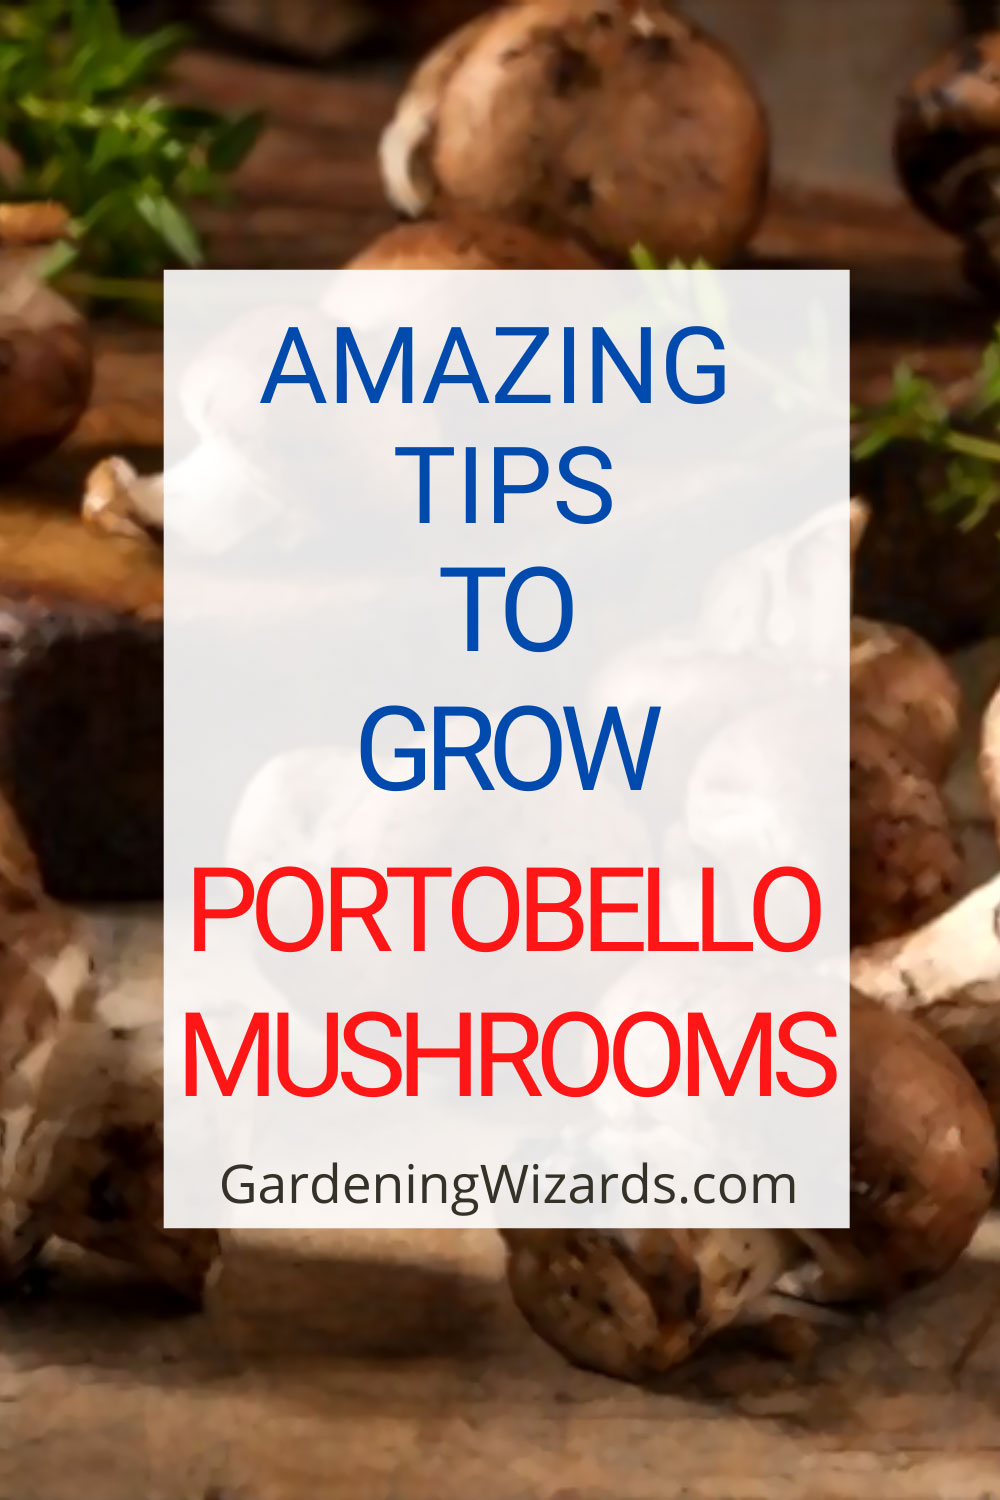 How To Grow Portobello mushrooms